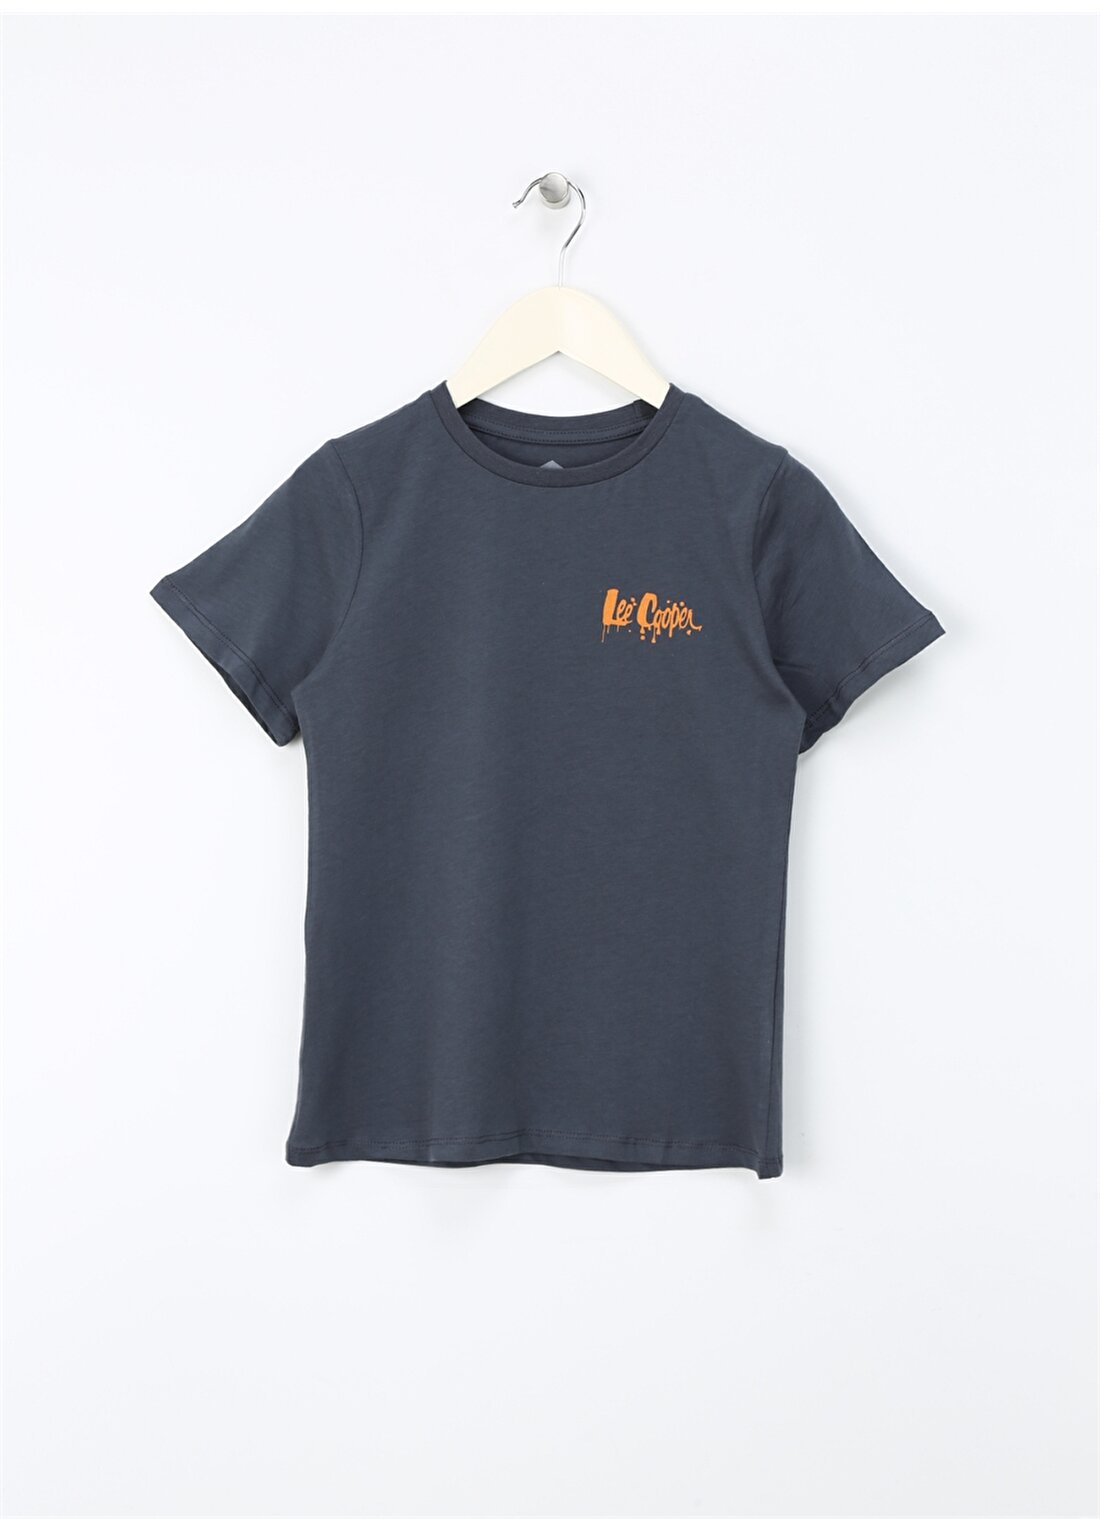 Lee Cooper Baskılı İndigo Erkek Çocuk T-Shirt 242 LCB 242005 ARES İNDİGO